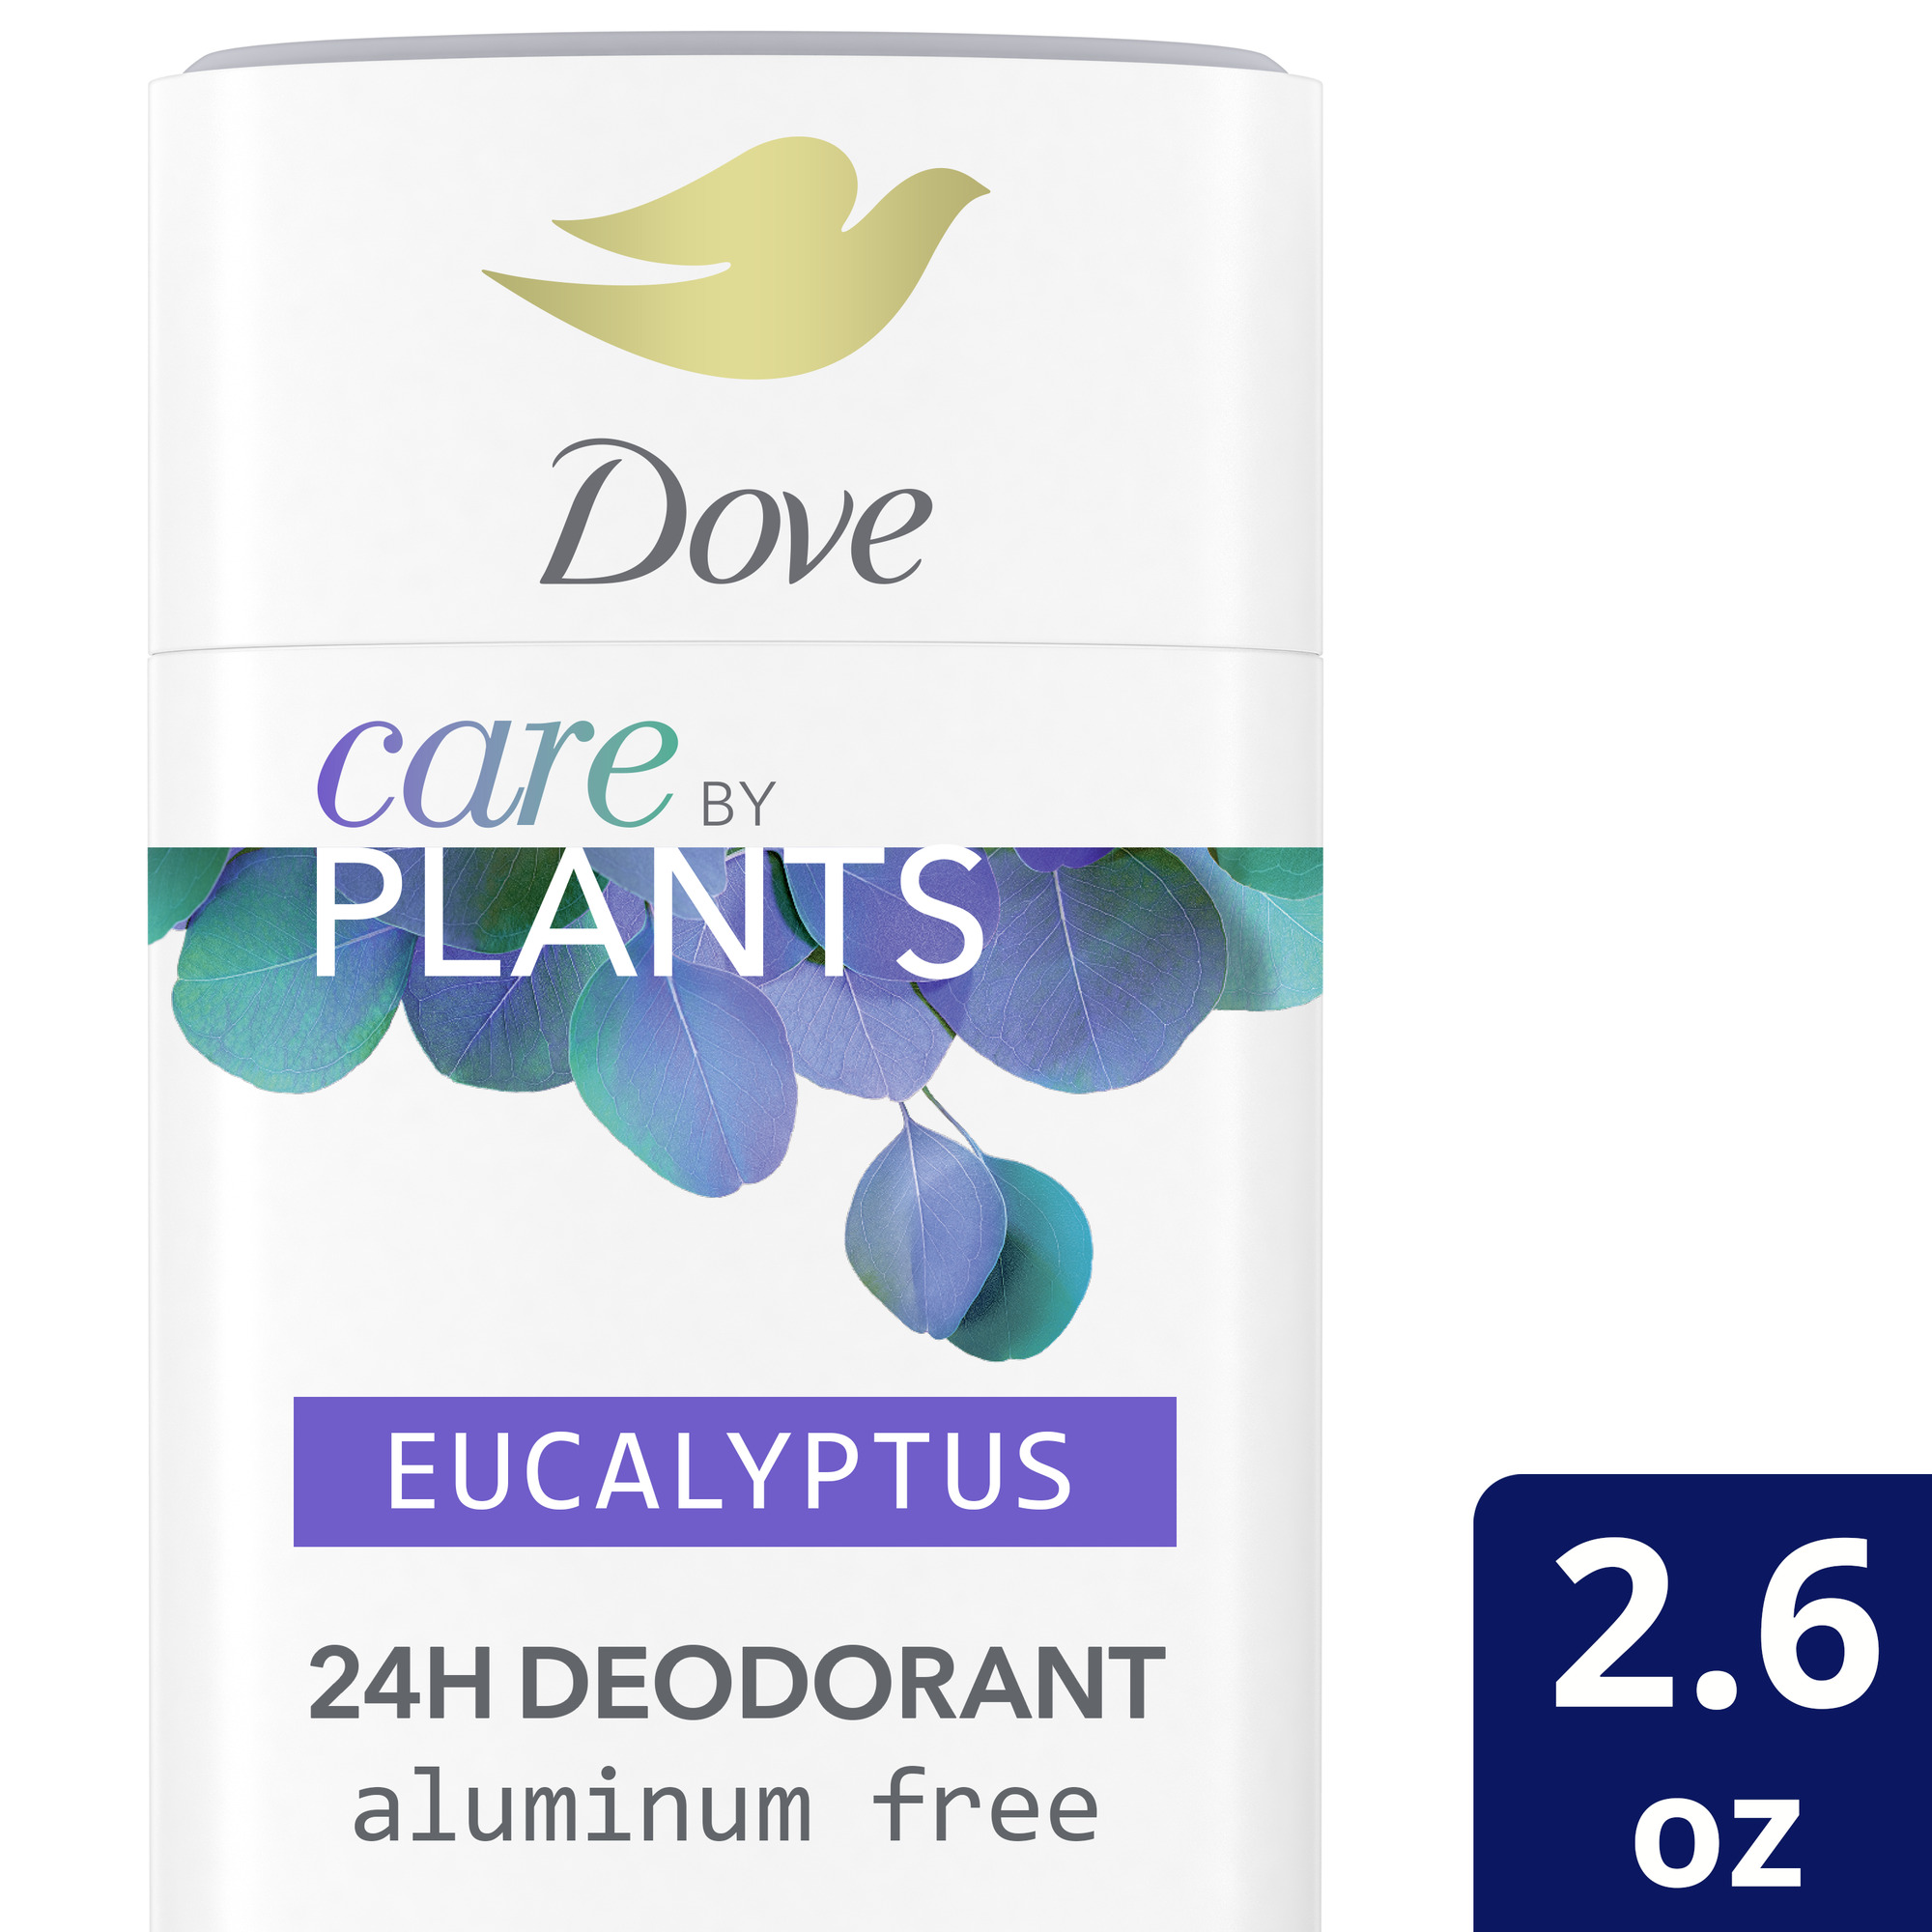 Dove Care by Plants Eucalyptus Deodorant 2.6 Oz - image 1 of 10